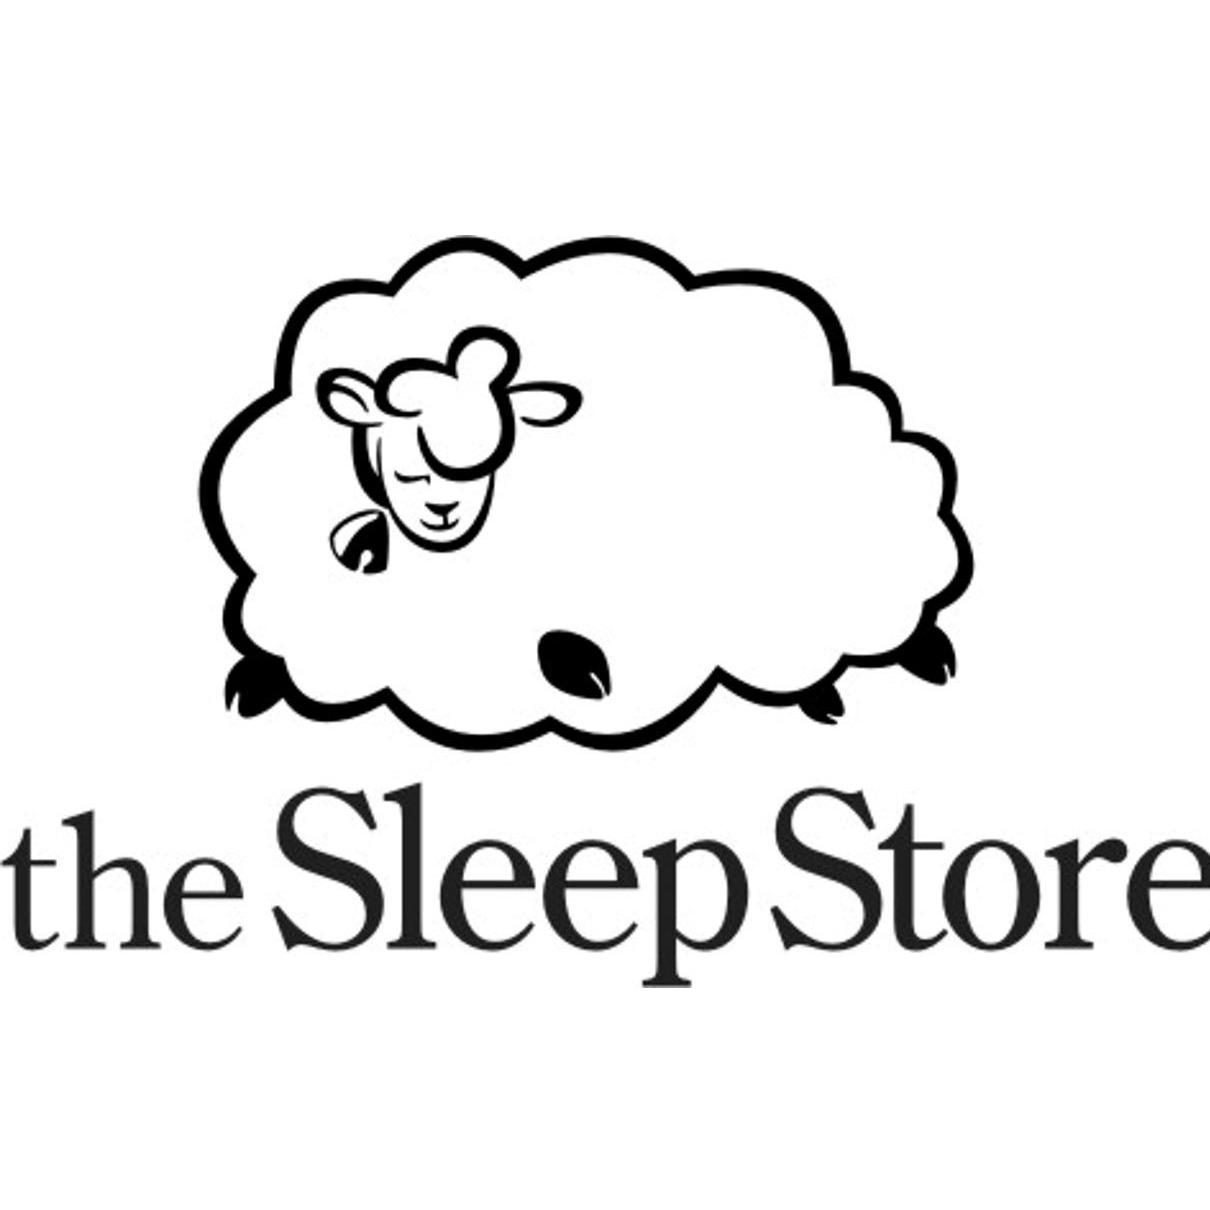 The Sleep Store